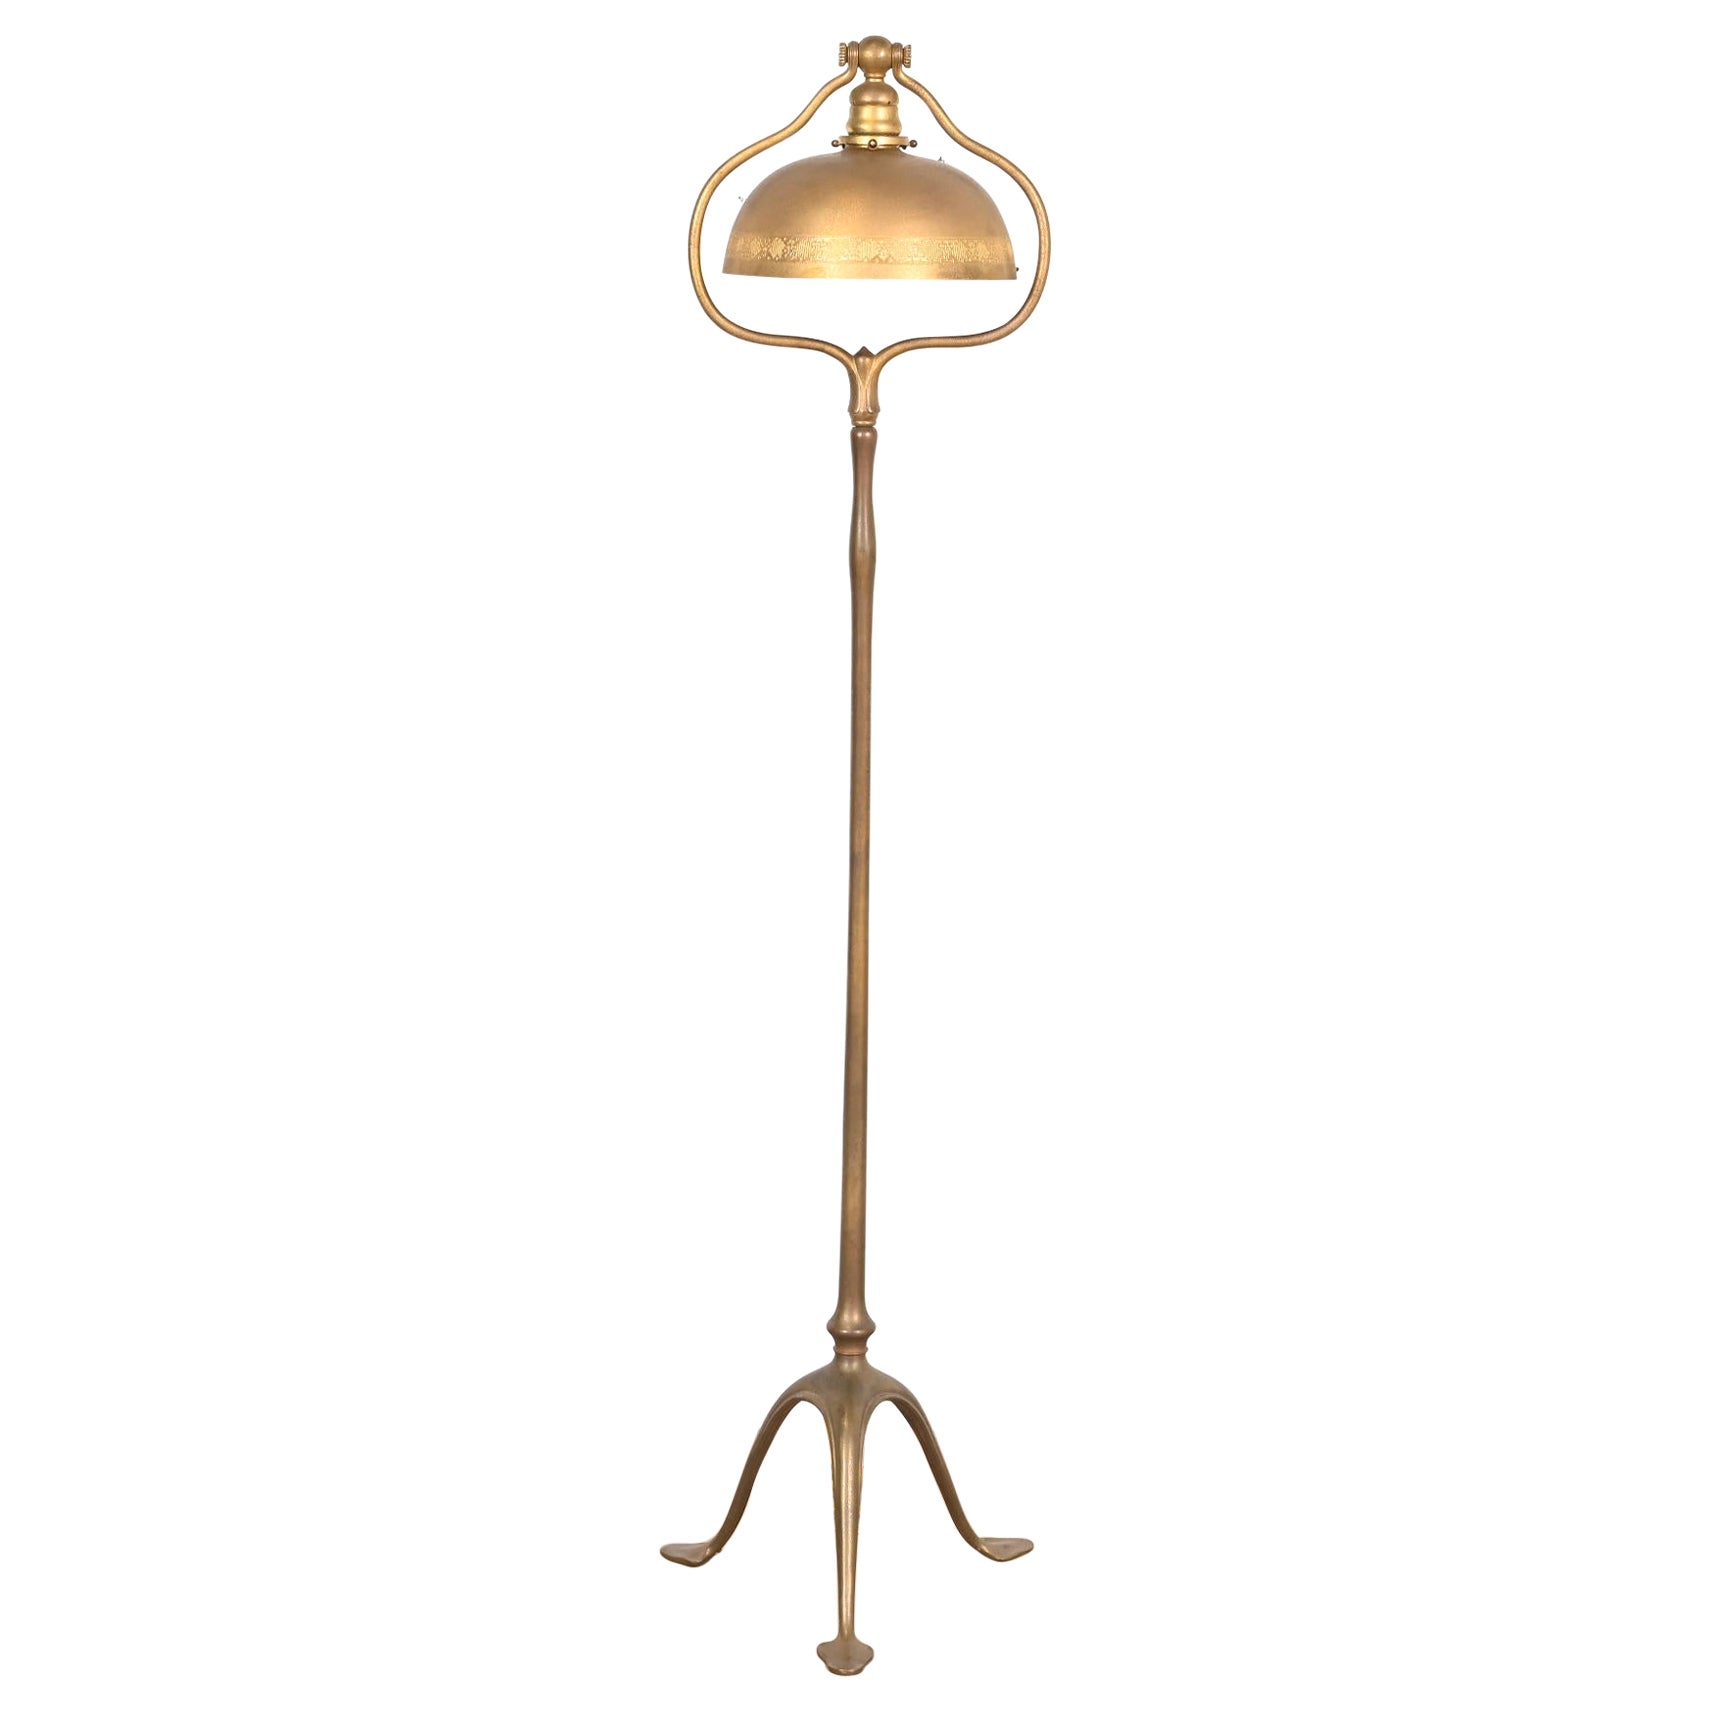 Tiffany Studios, New York, Stehlampe, vergoldete Bronze, Harfe